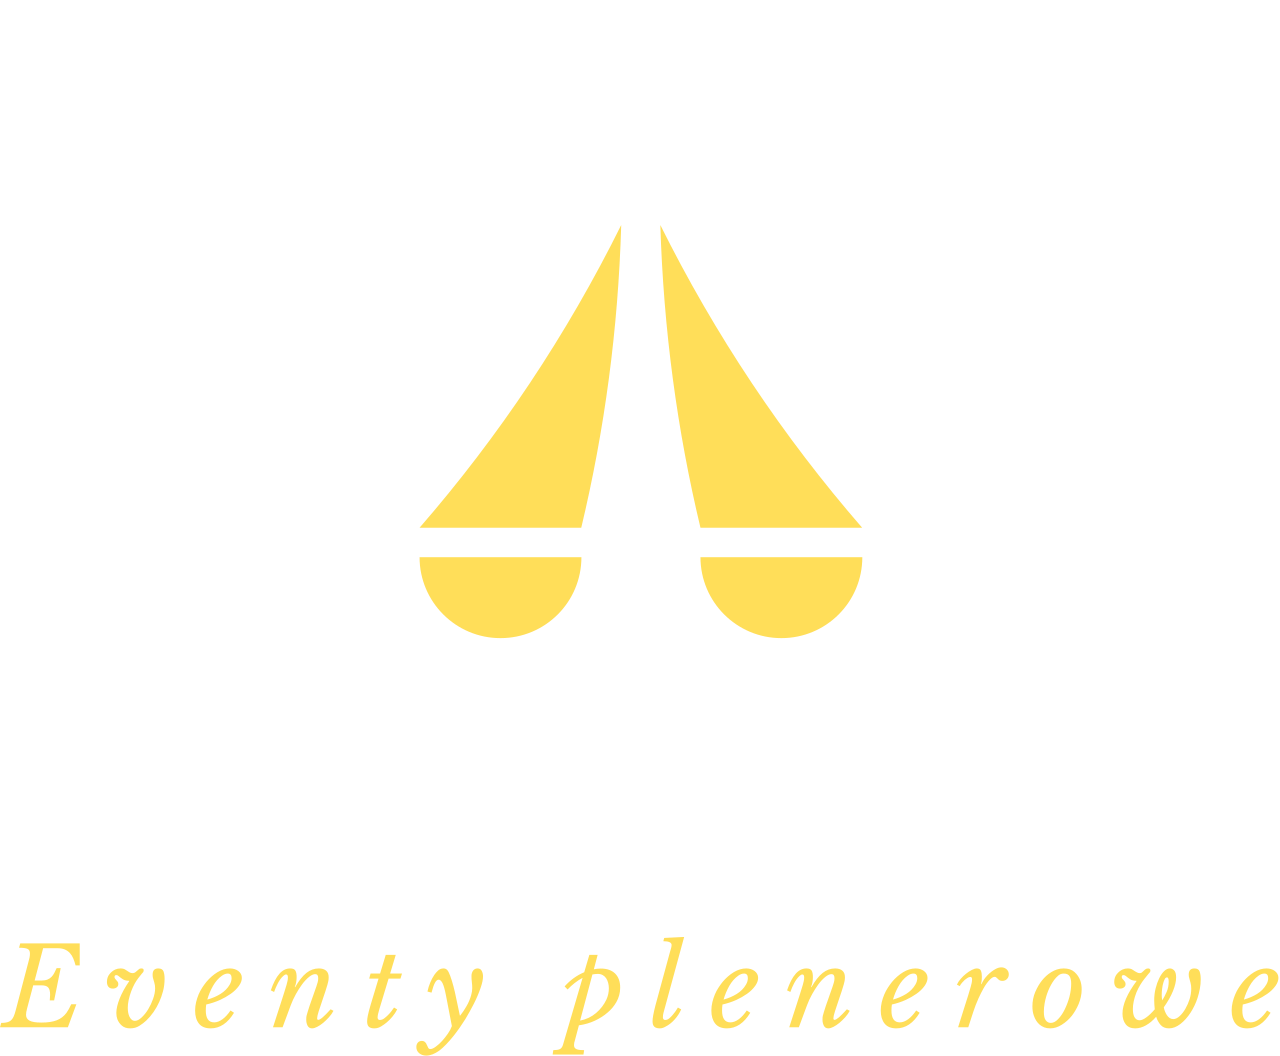 Eventurowi's logo